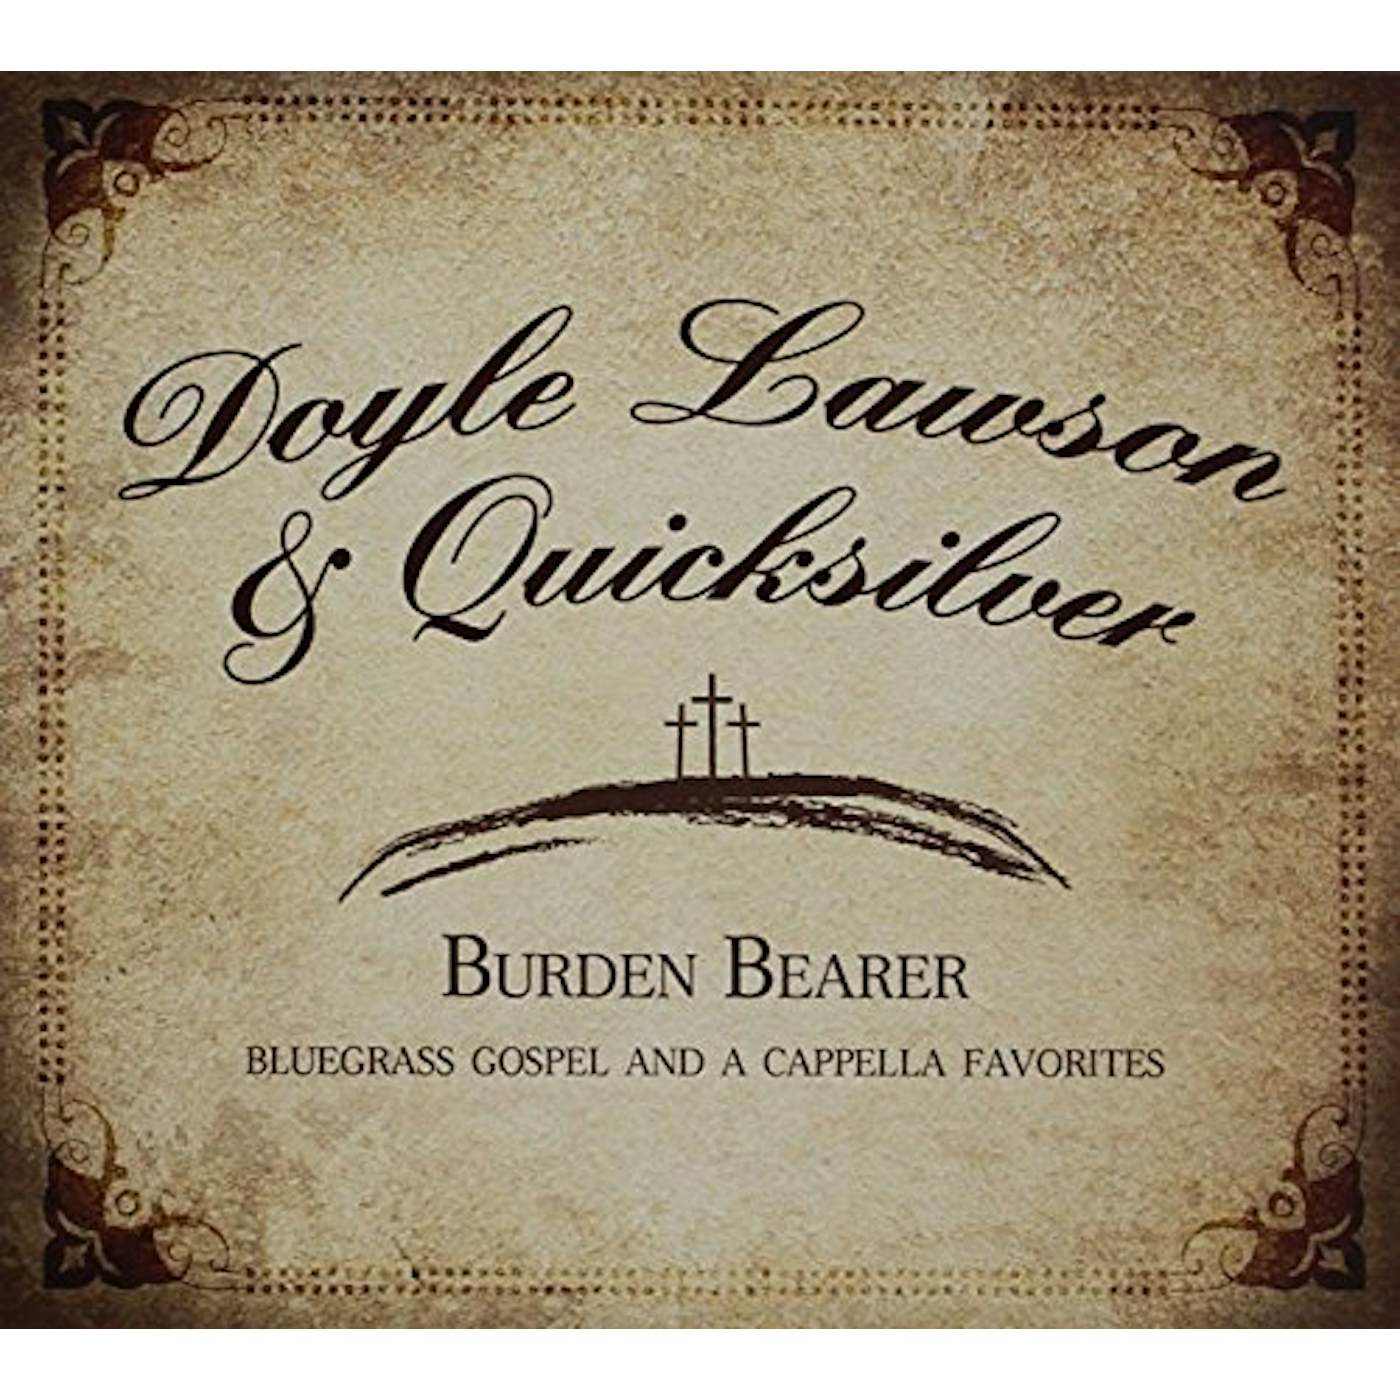 Doyle Lawson & Quicksilver BURDEN BEARER CD